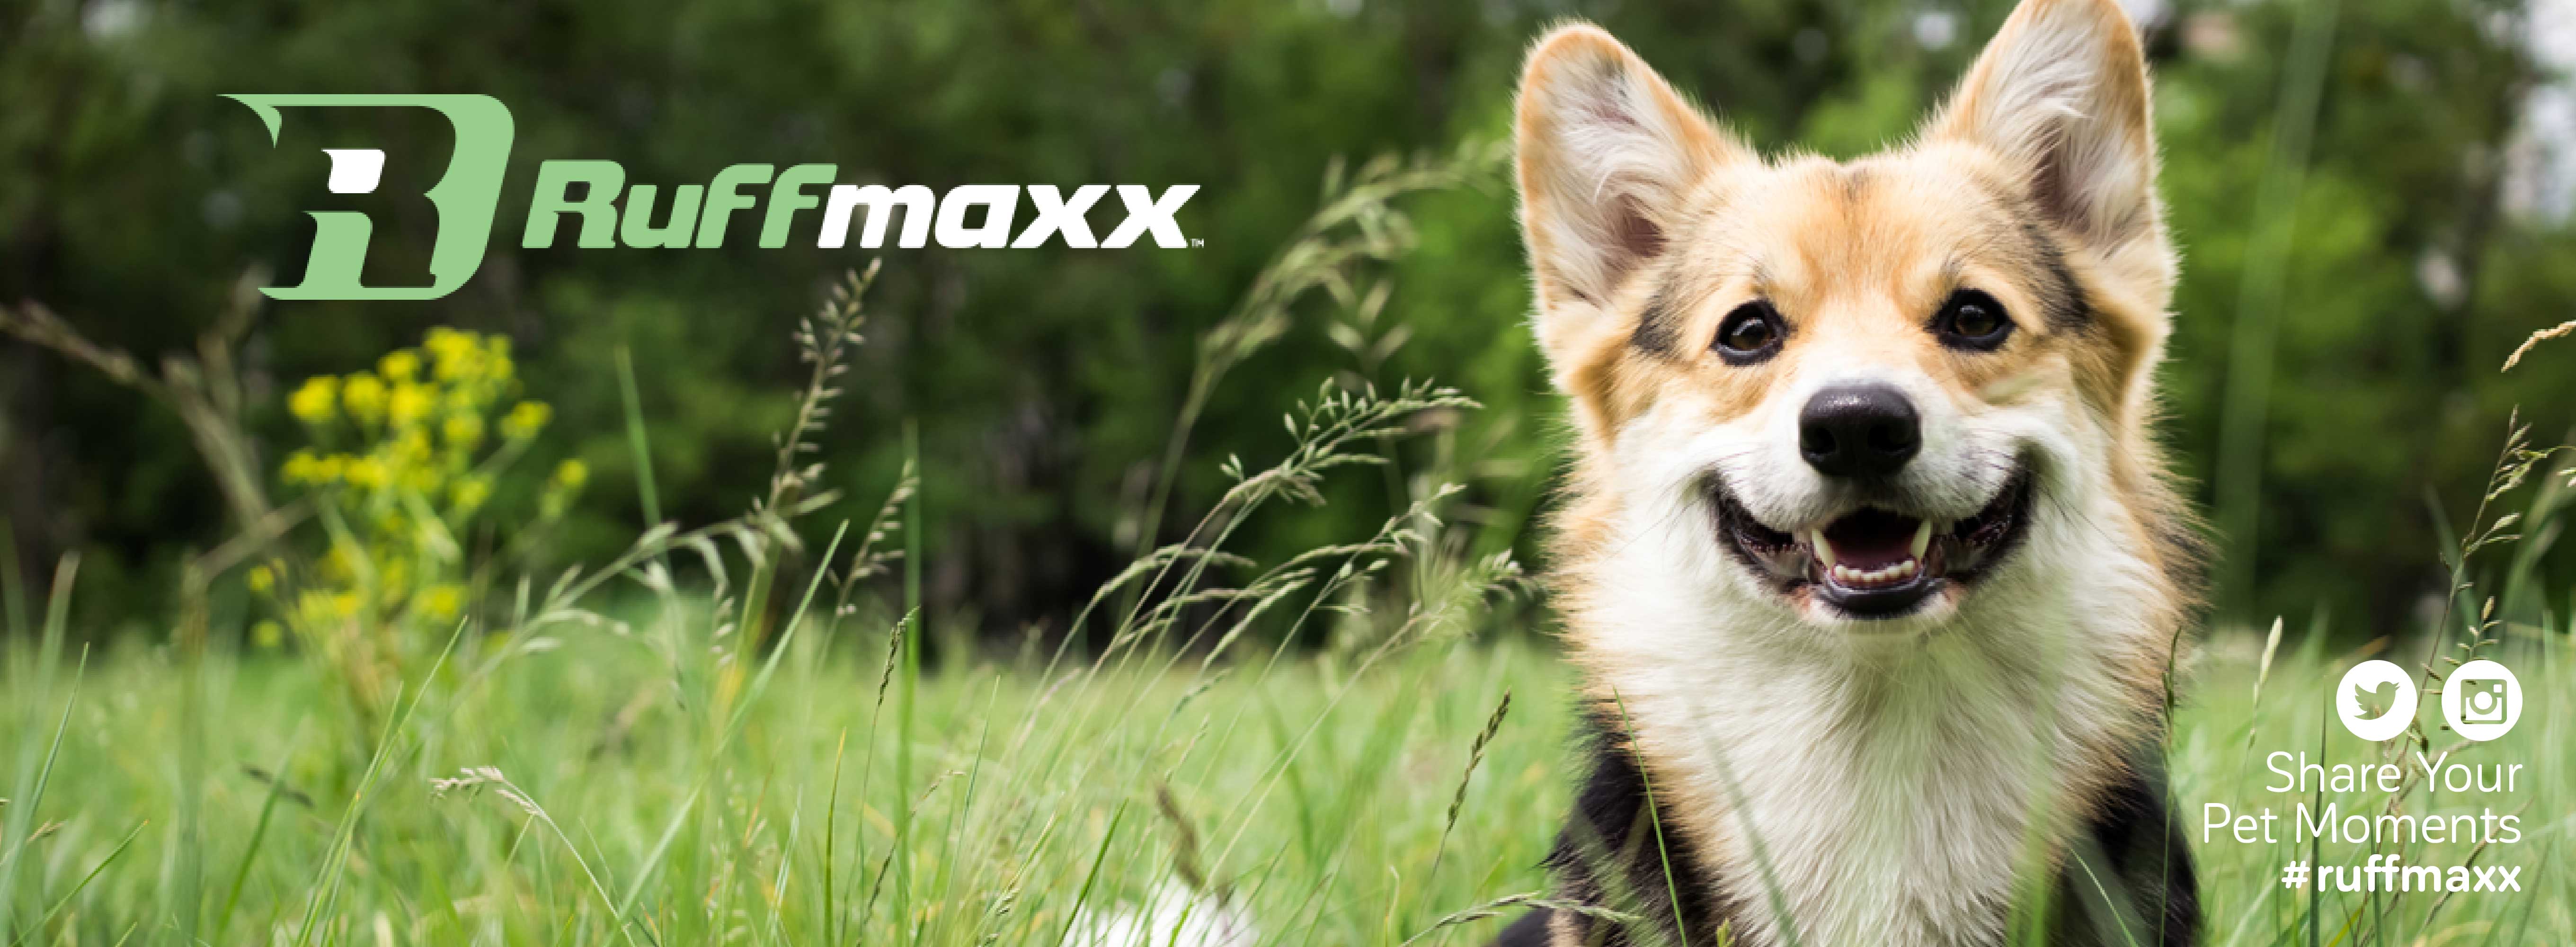 Ruffmaxx Dog Products